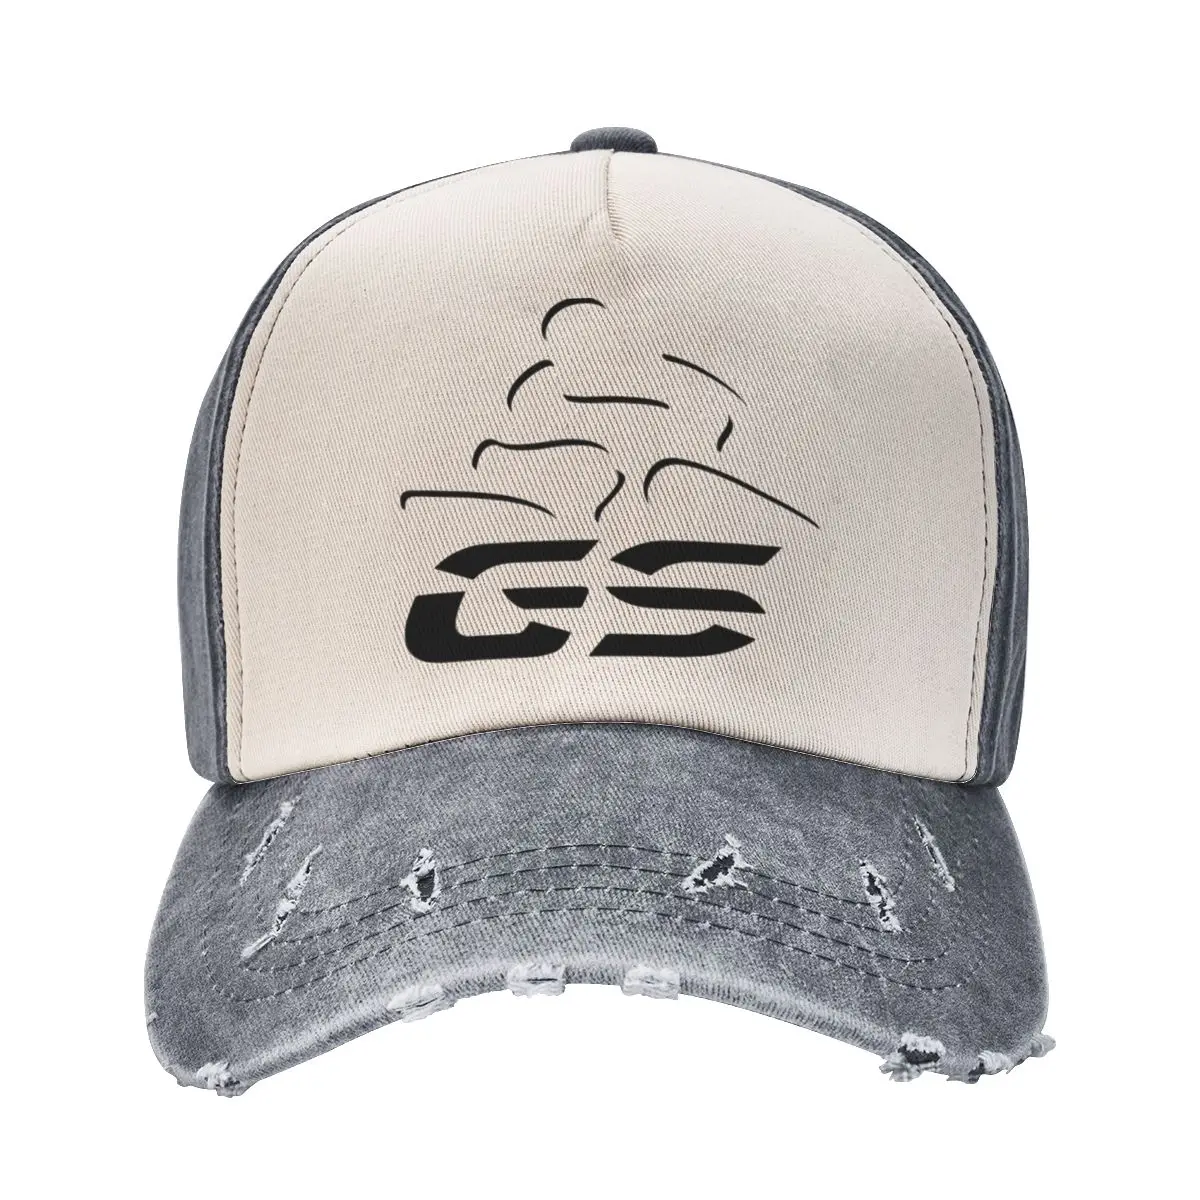 

GS Enduro V5 Motorcycle Merch Men Women Baseball Cap Distressed Cotton Caps Hat Vintage Outdoor Workouts Snapback Cap